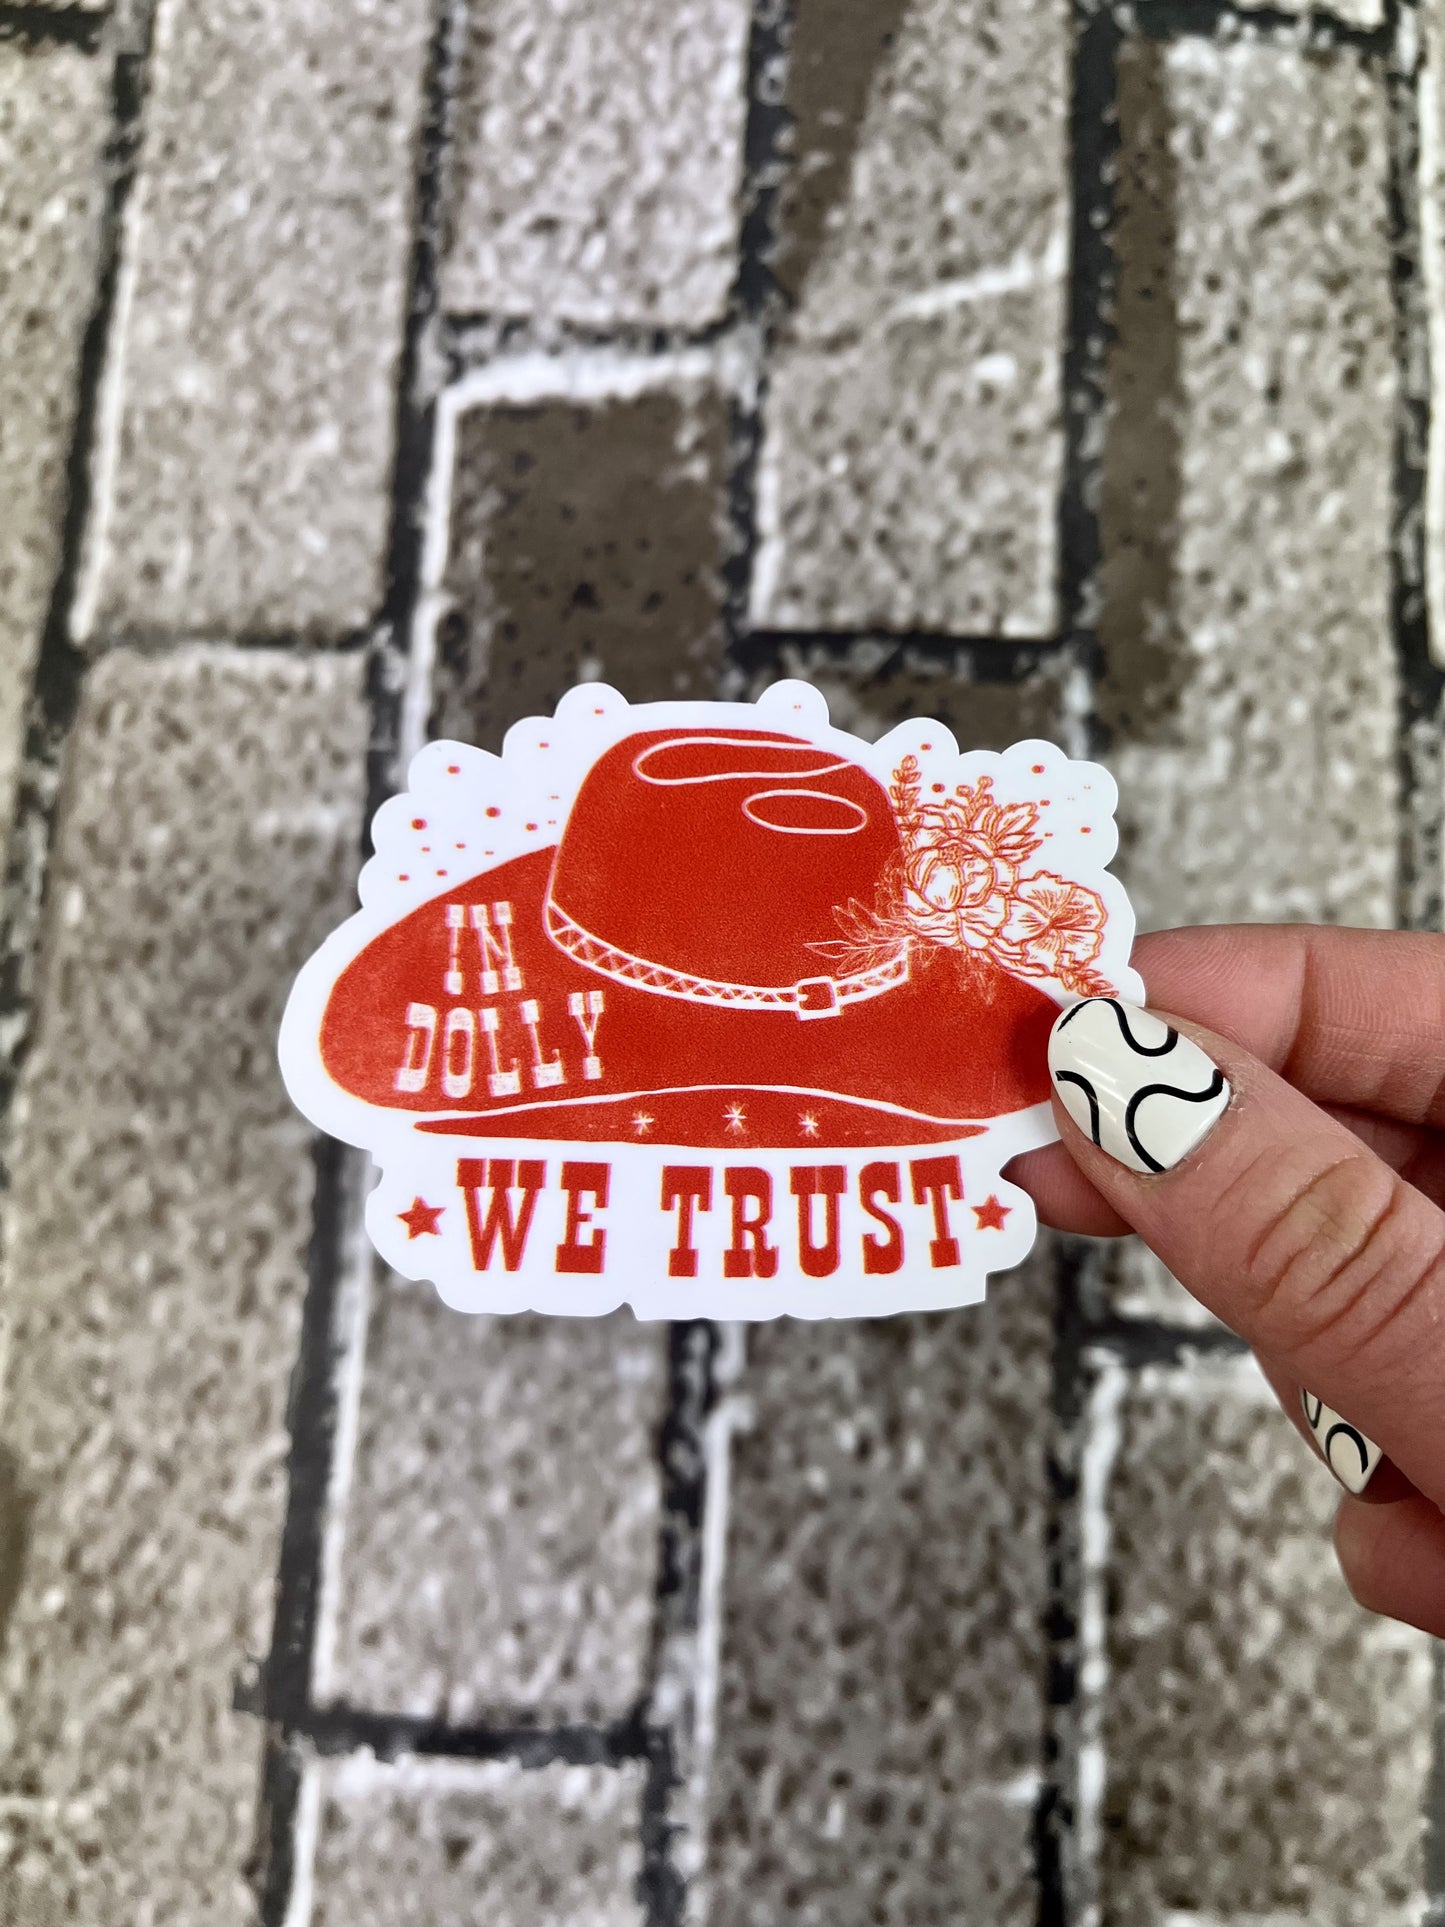 "In Dolly We Trust" Vinyl Sticker